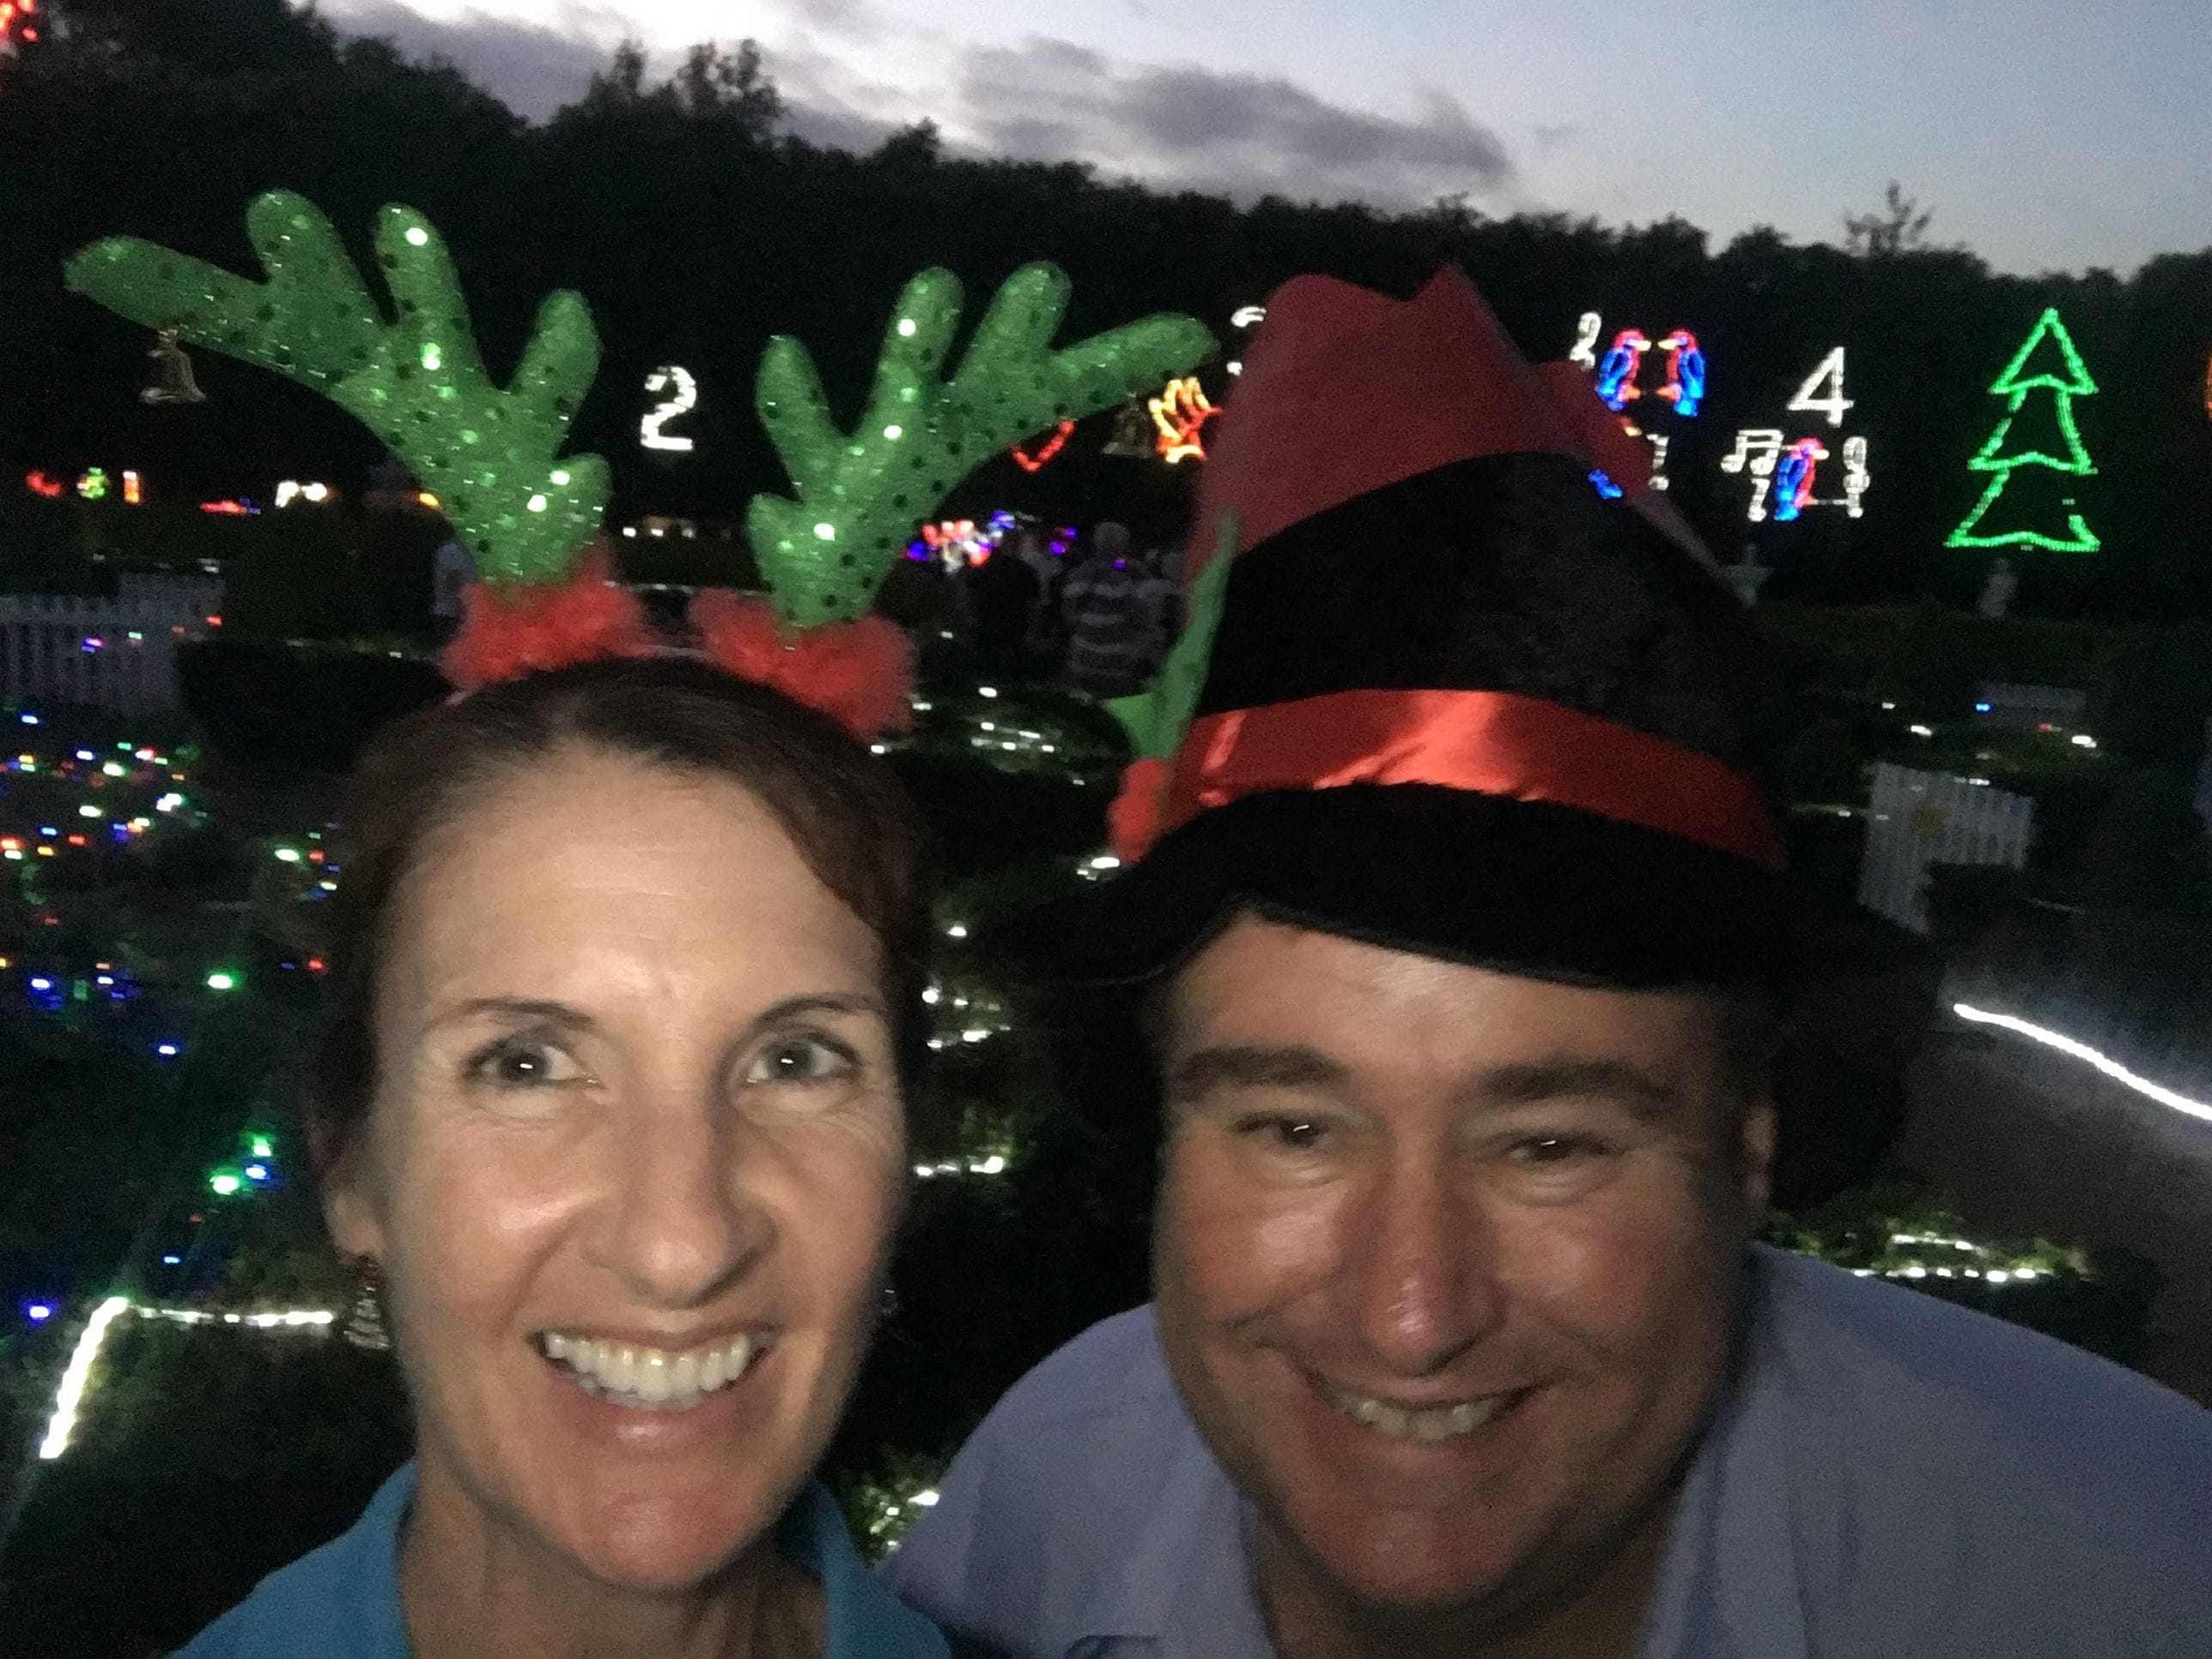 Hunter Valley Gardens Christmas Lights 2018-2019 Public Day Night Tour Image -5c149f5ed1da5